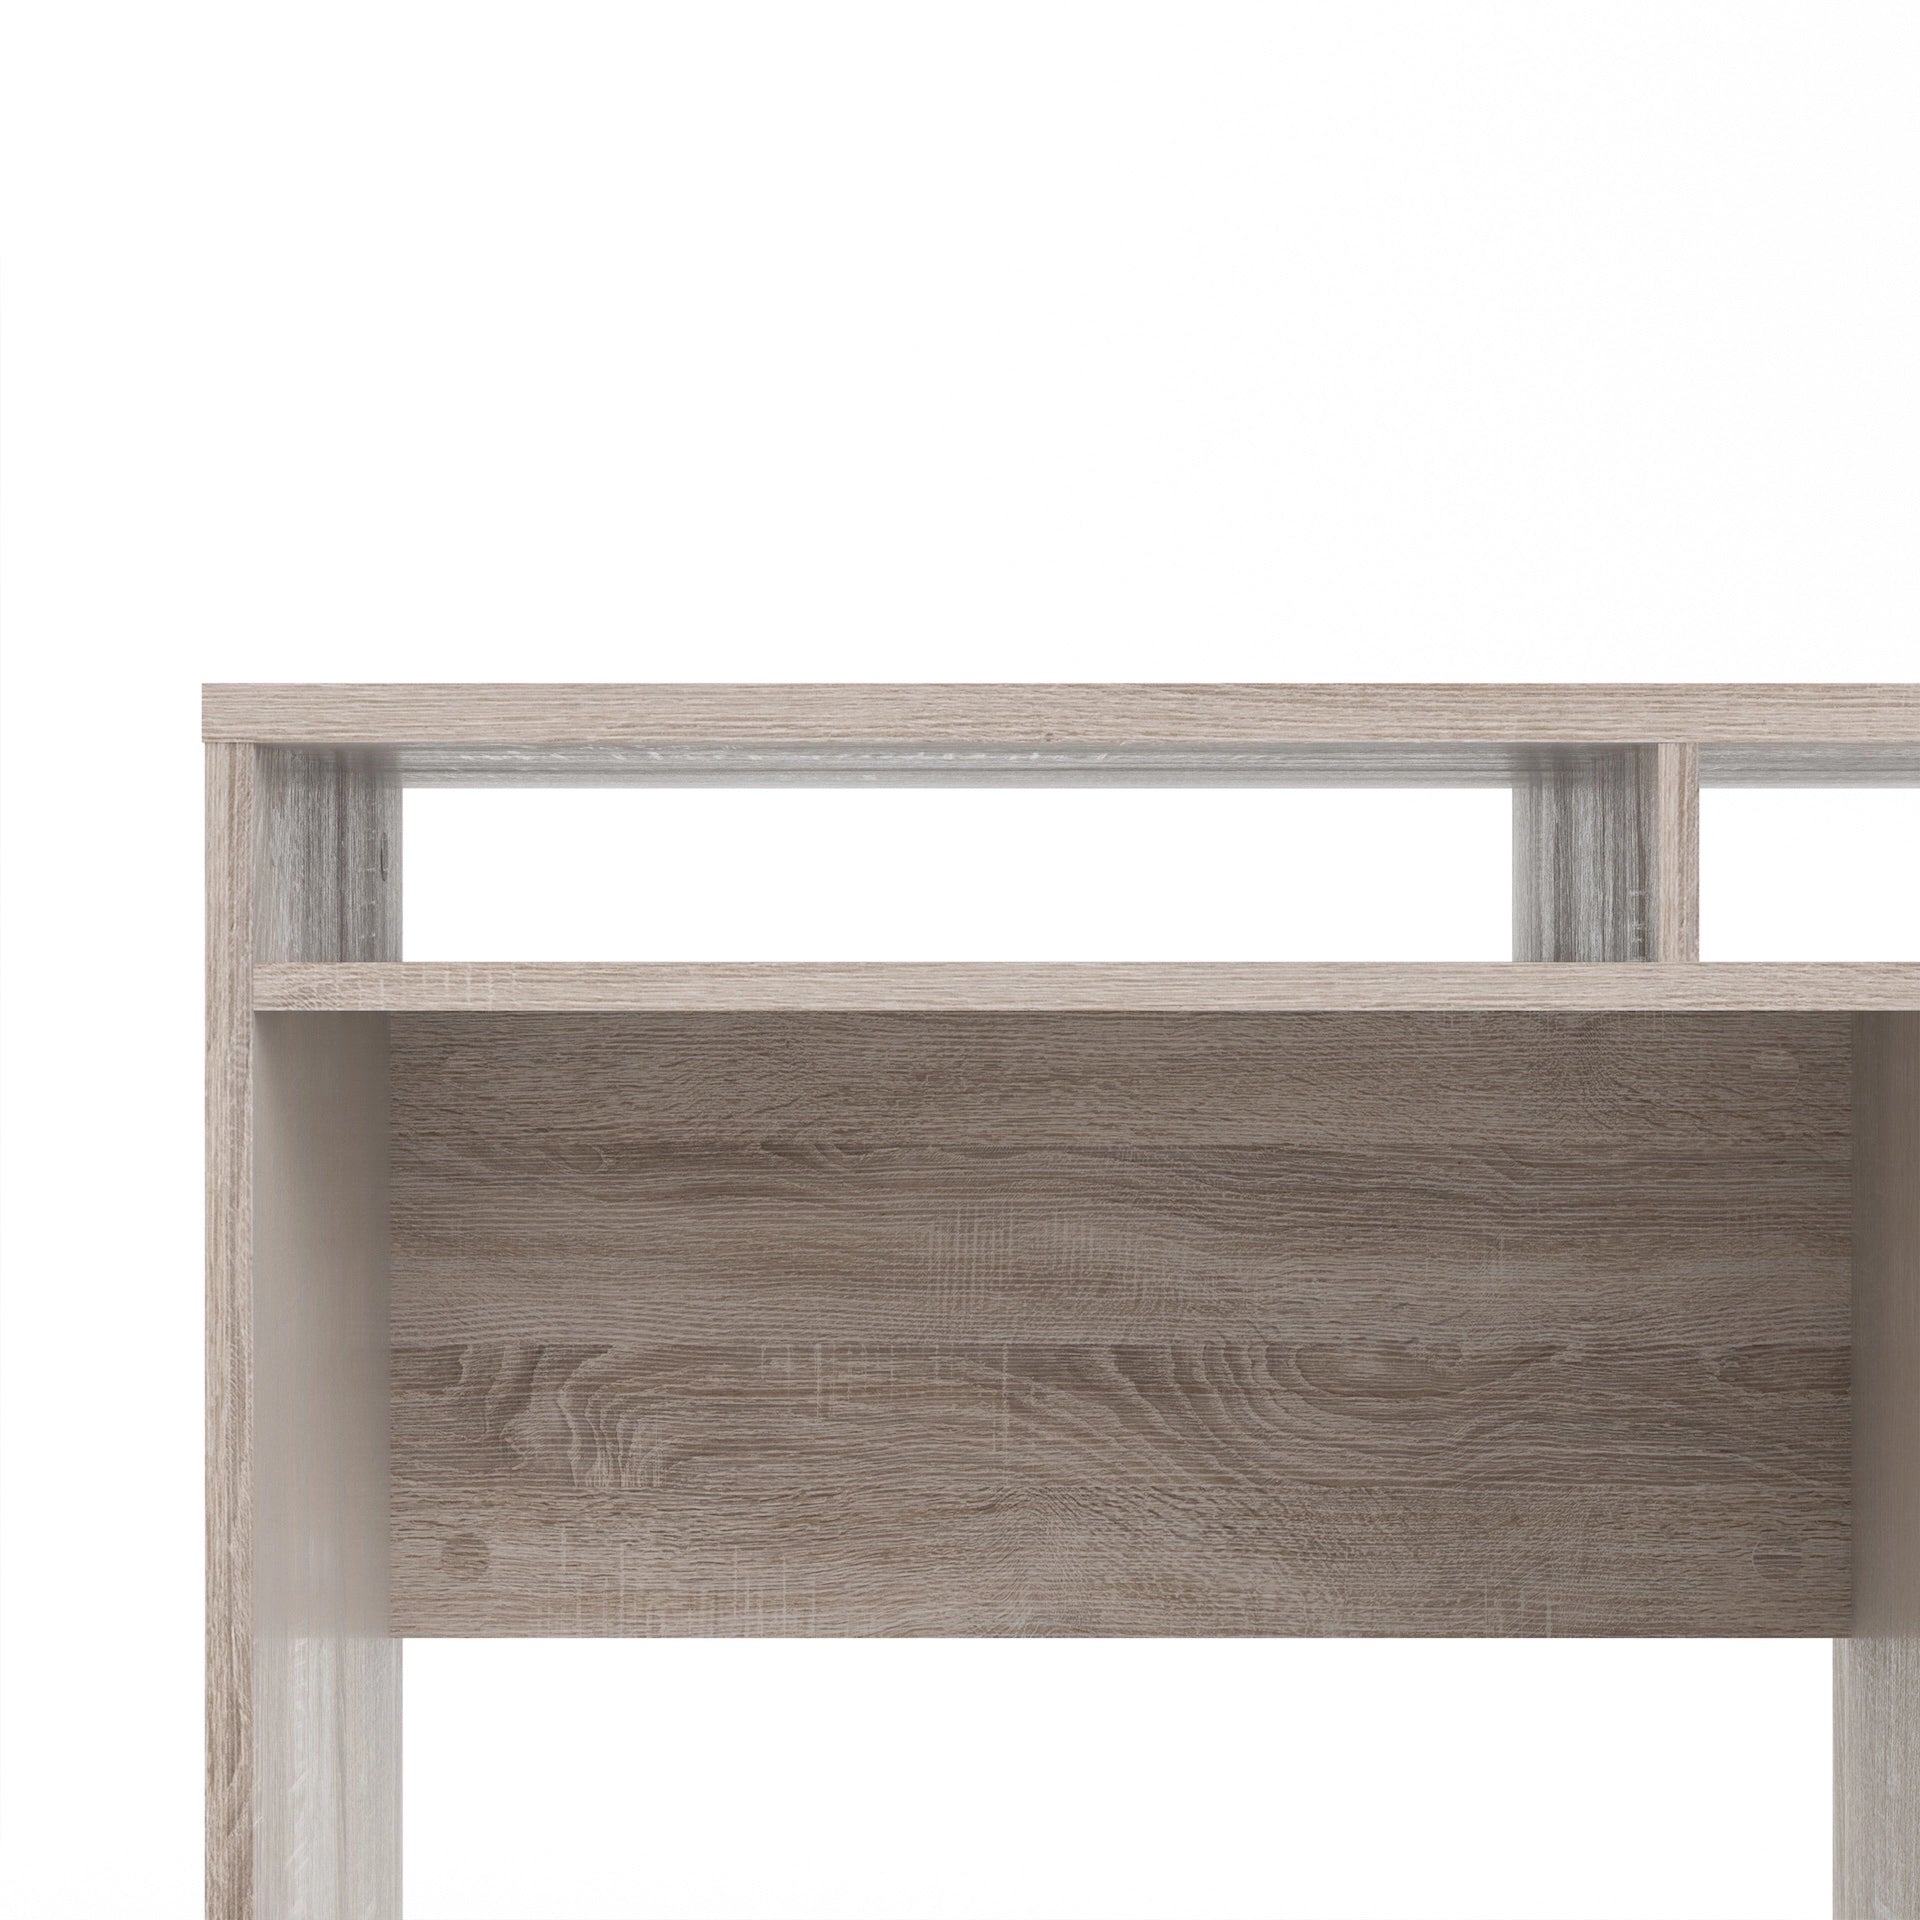 Furniture To Go Function Plus Desk 1 Door 1 Drawer in Truffle Oak